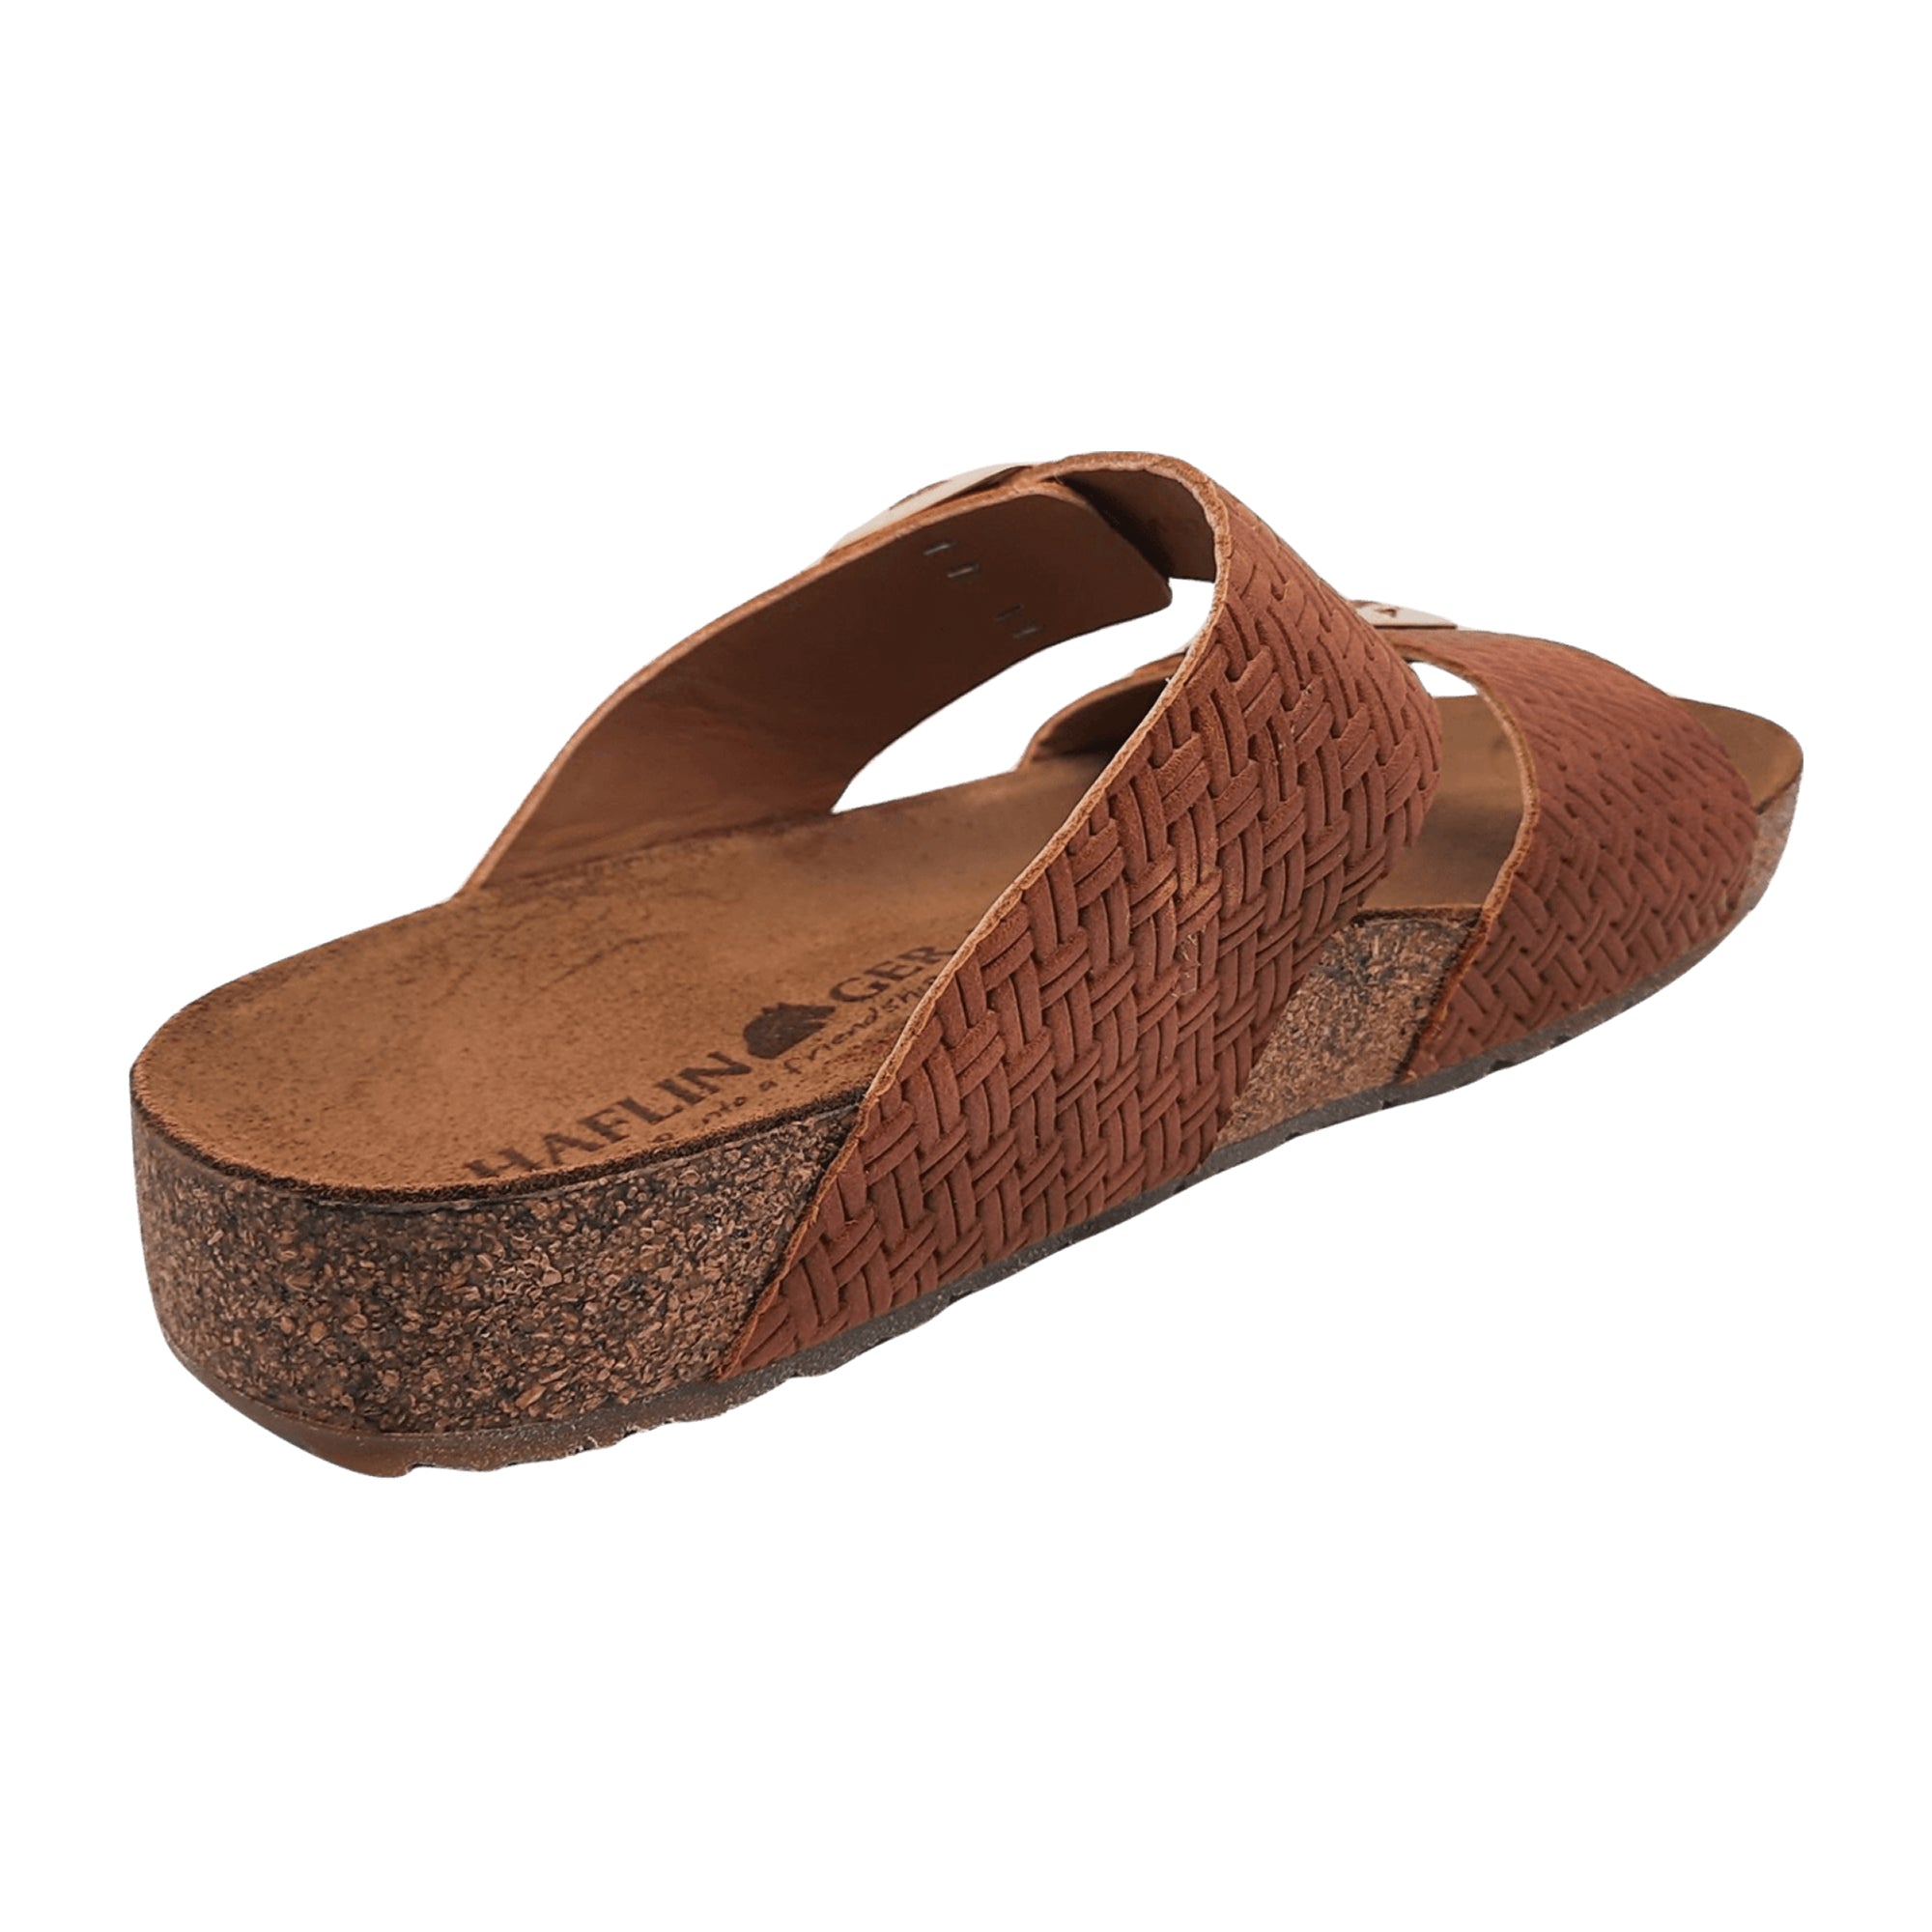 Haflinger Bio Andrea Women's Sandals - Caramel Braided, Brown, EU 37